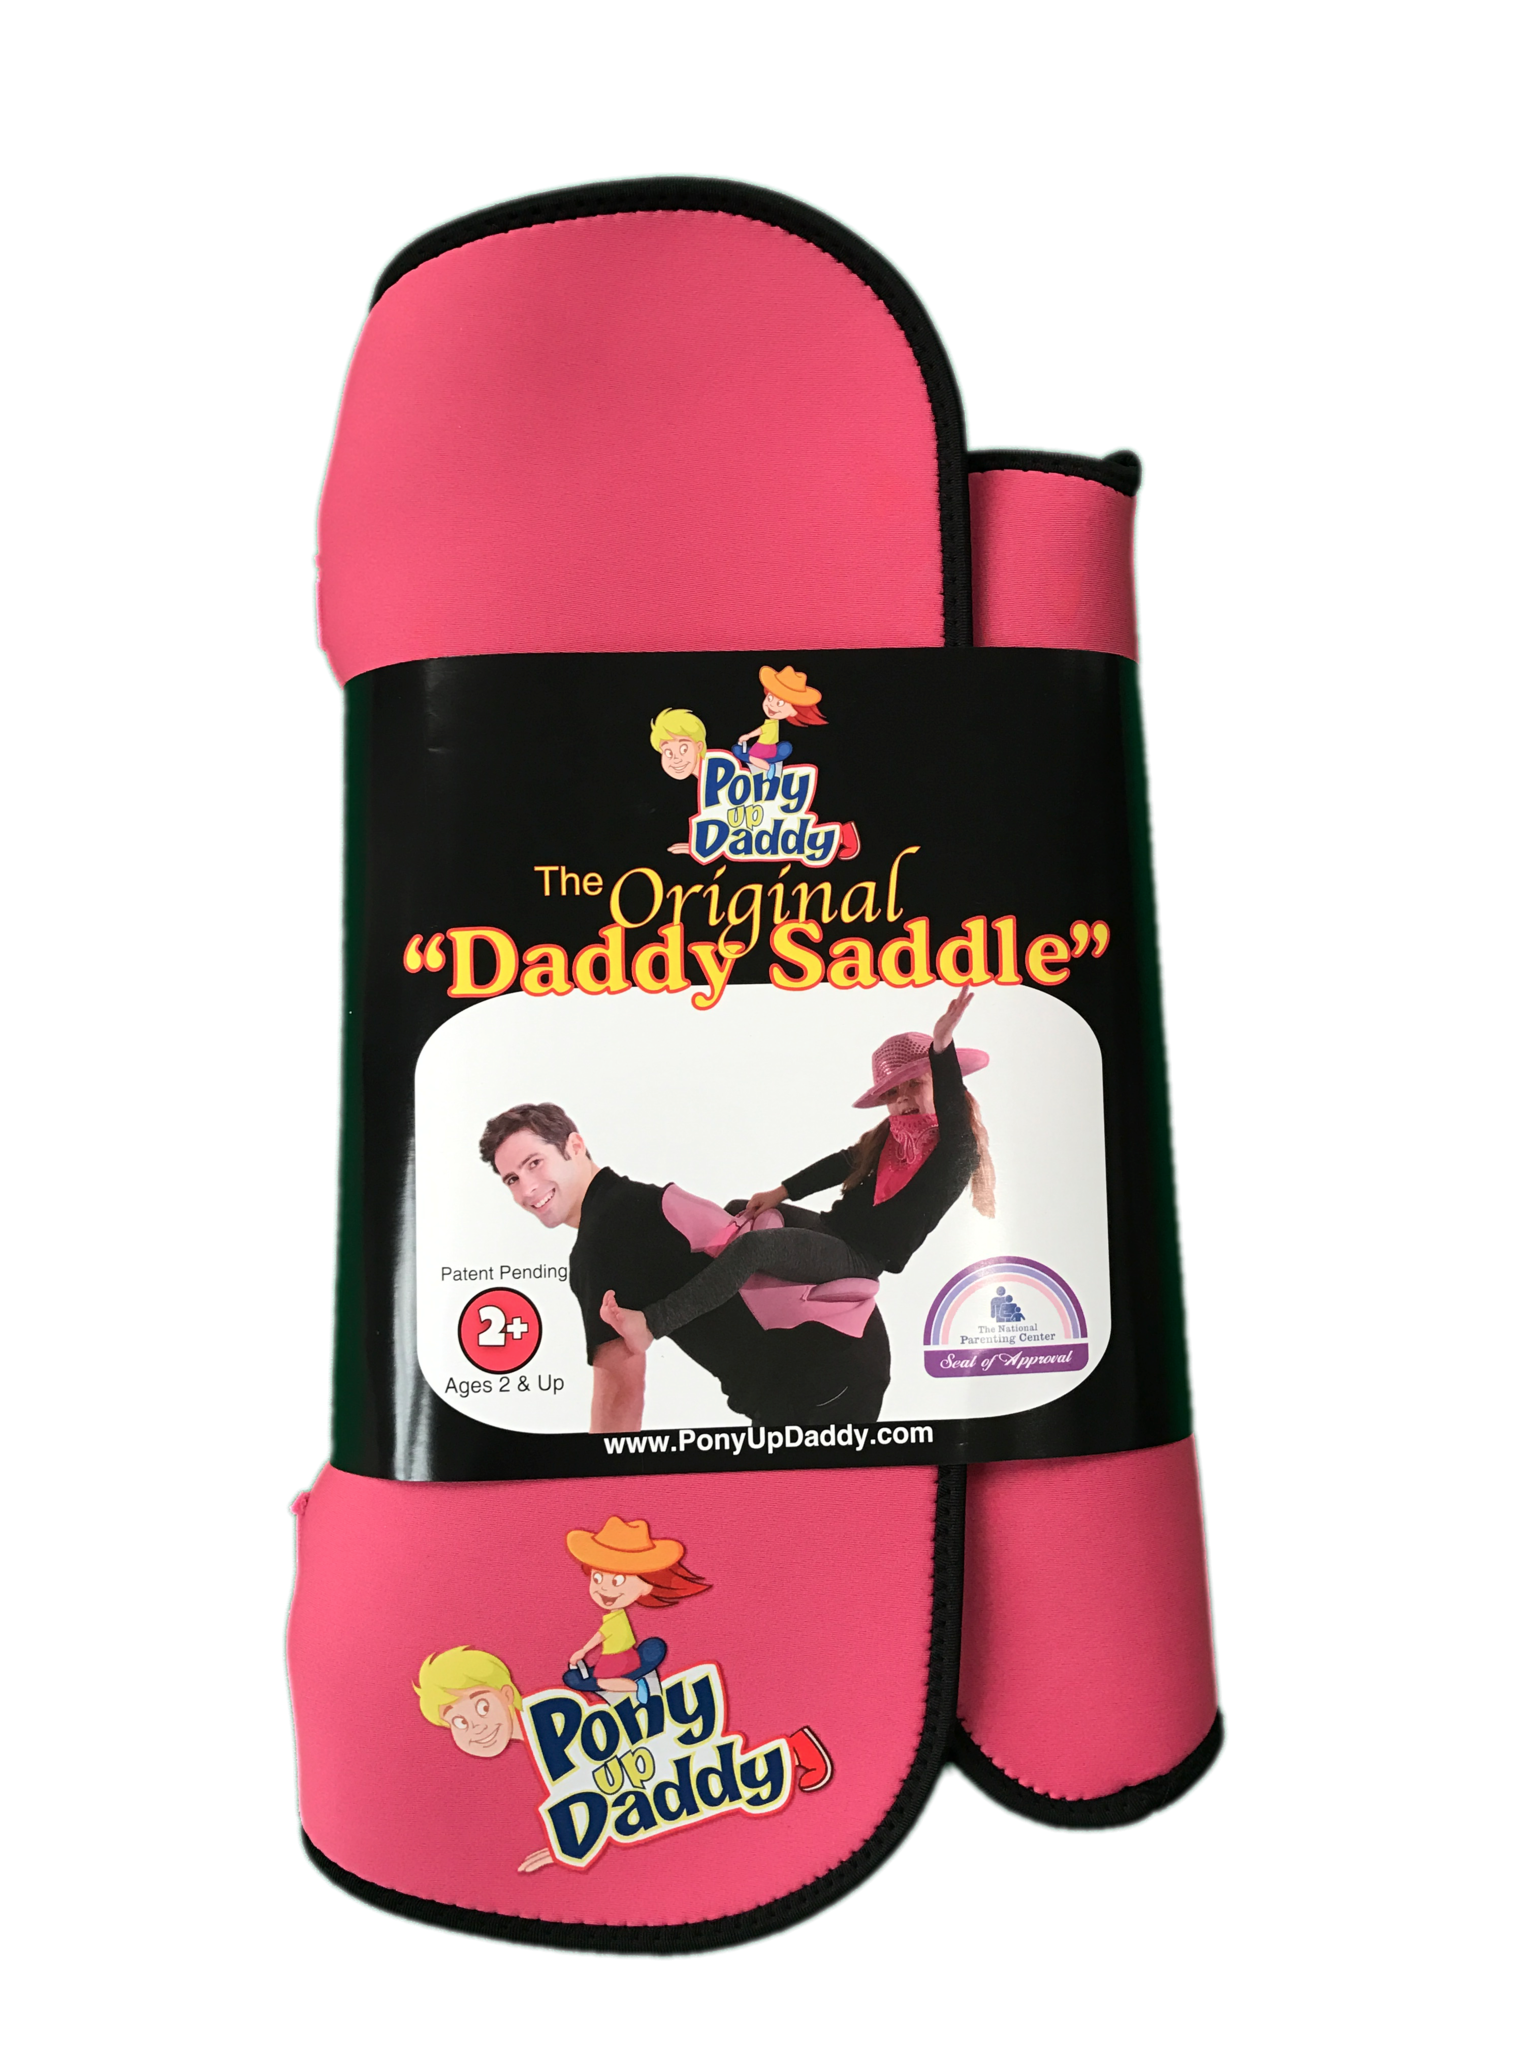 Pony Up Daddy Saddles The Original Daddy Saddle